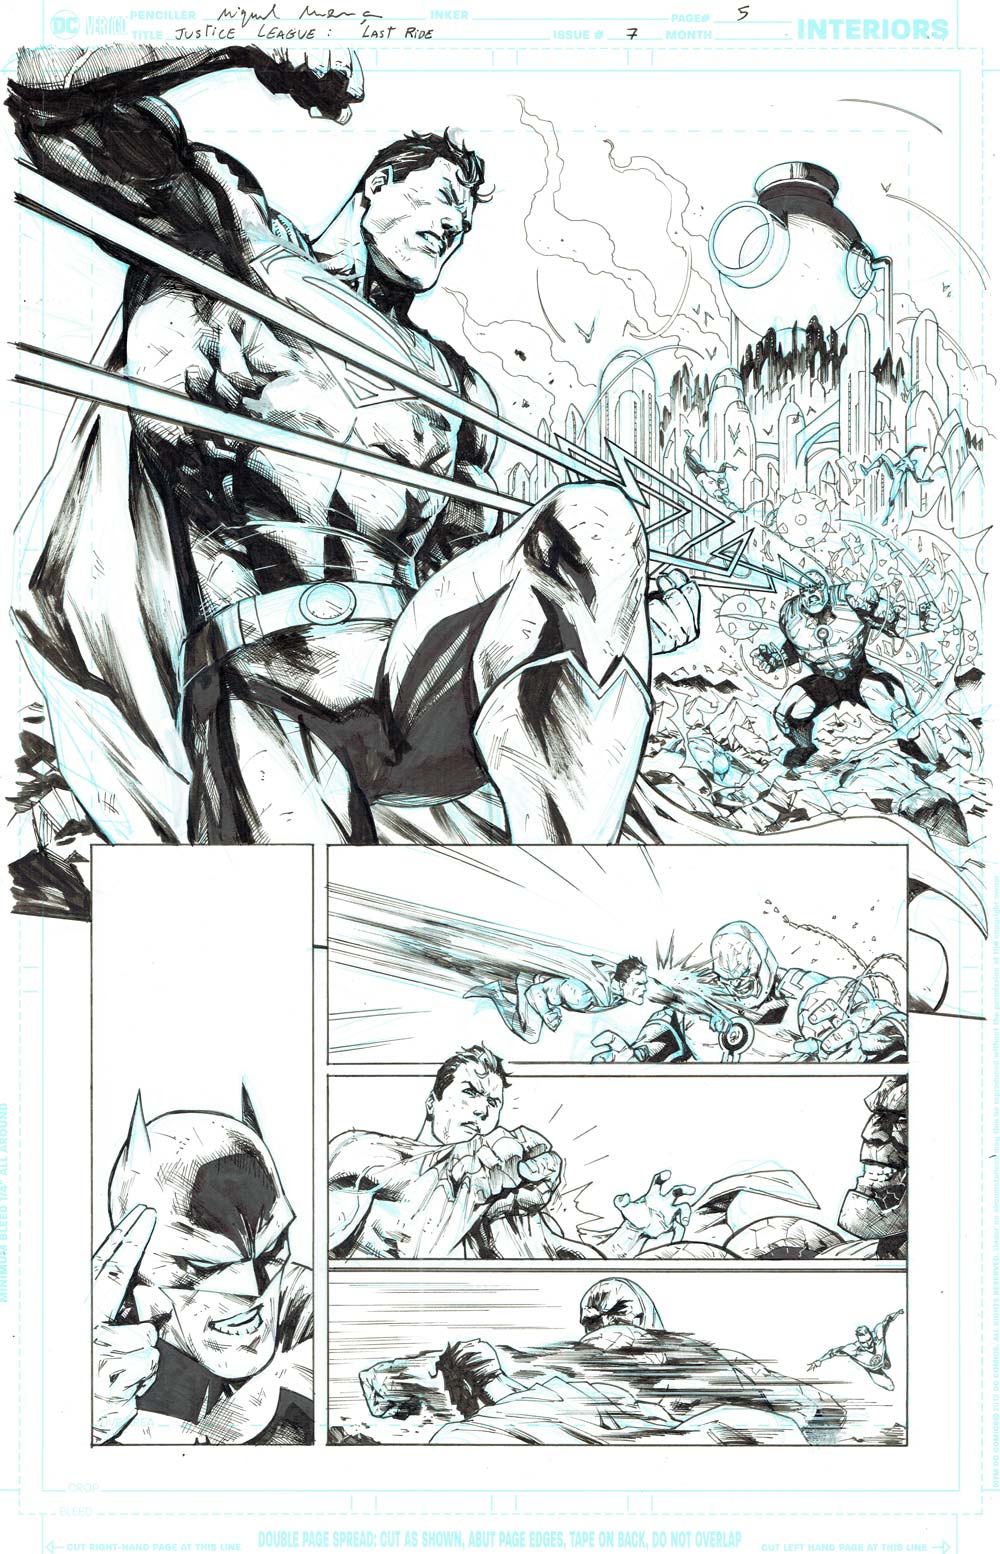 Justice League - Last Ride #4 (Page 5)